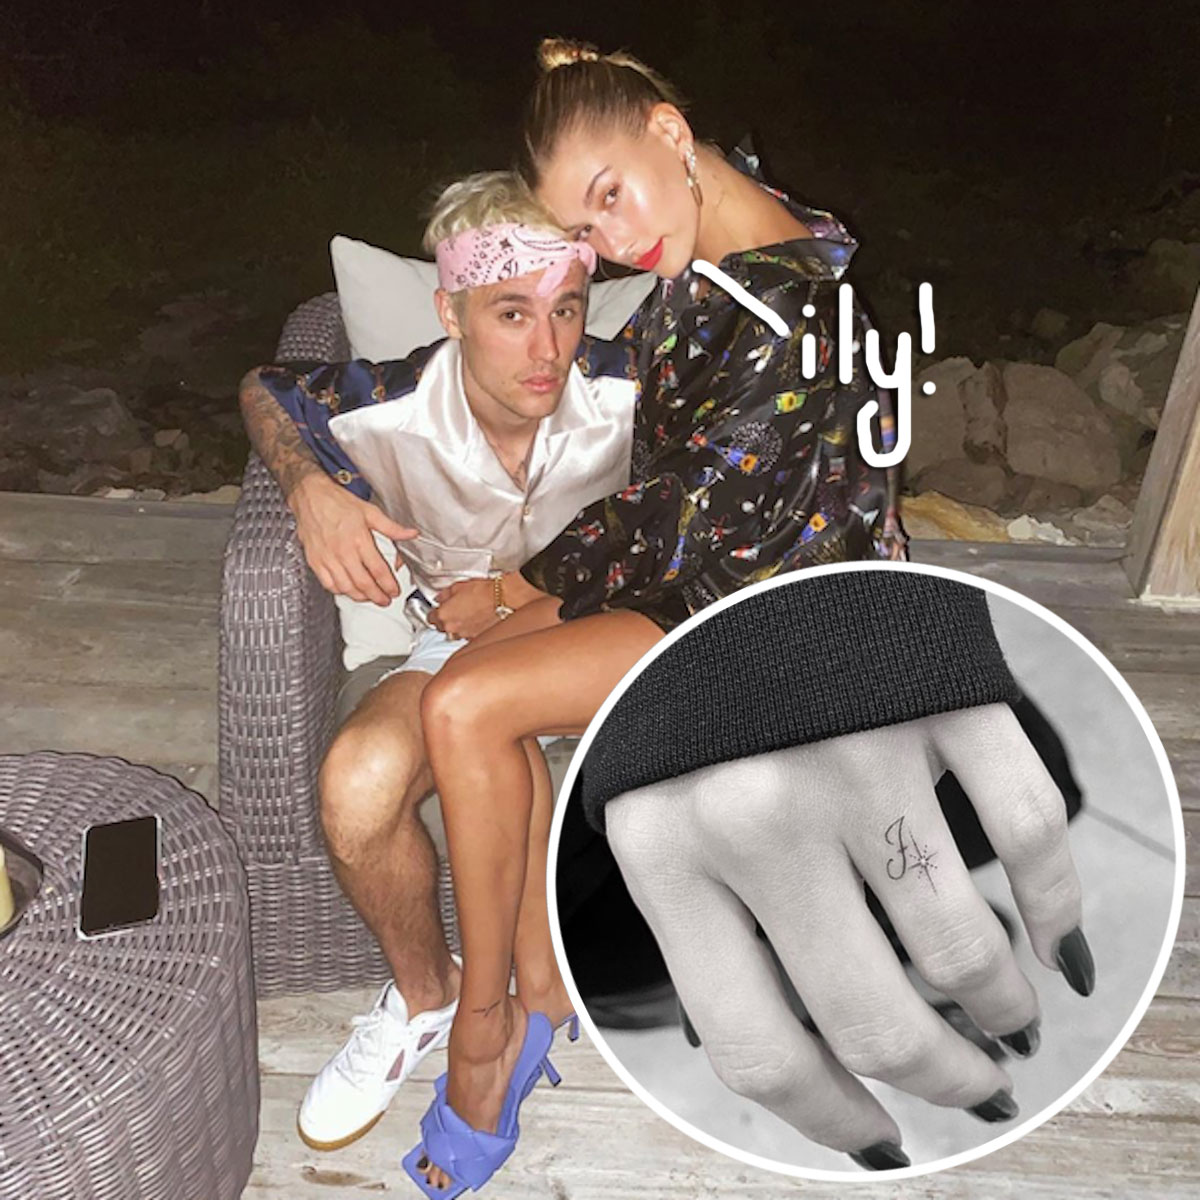 Hailey Bieber gets J tattooed on ring finger in honor of husband Justin  Bieber  Celebrities  celebretainmentcom